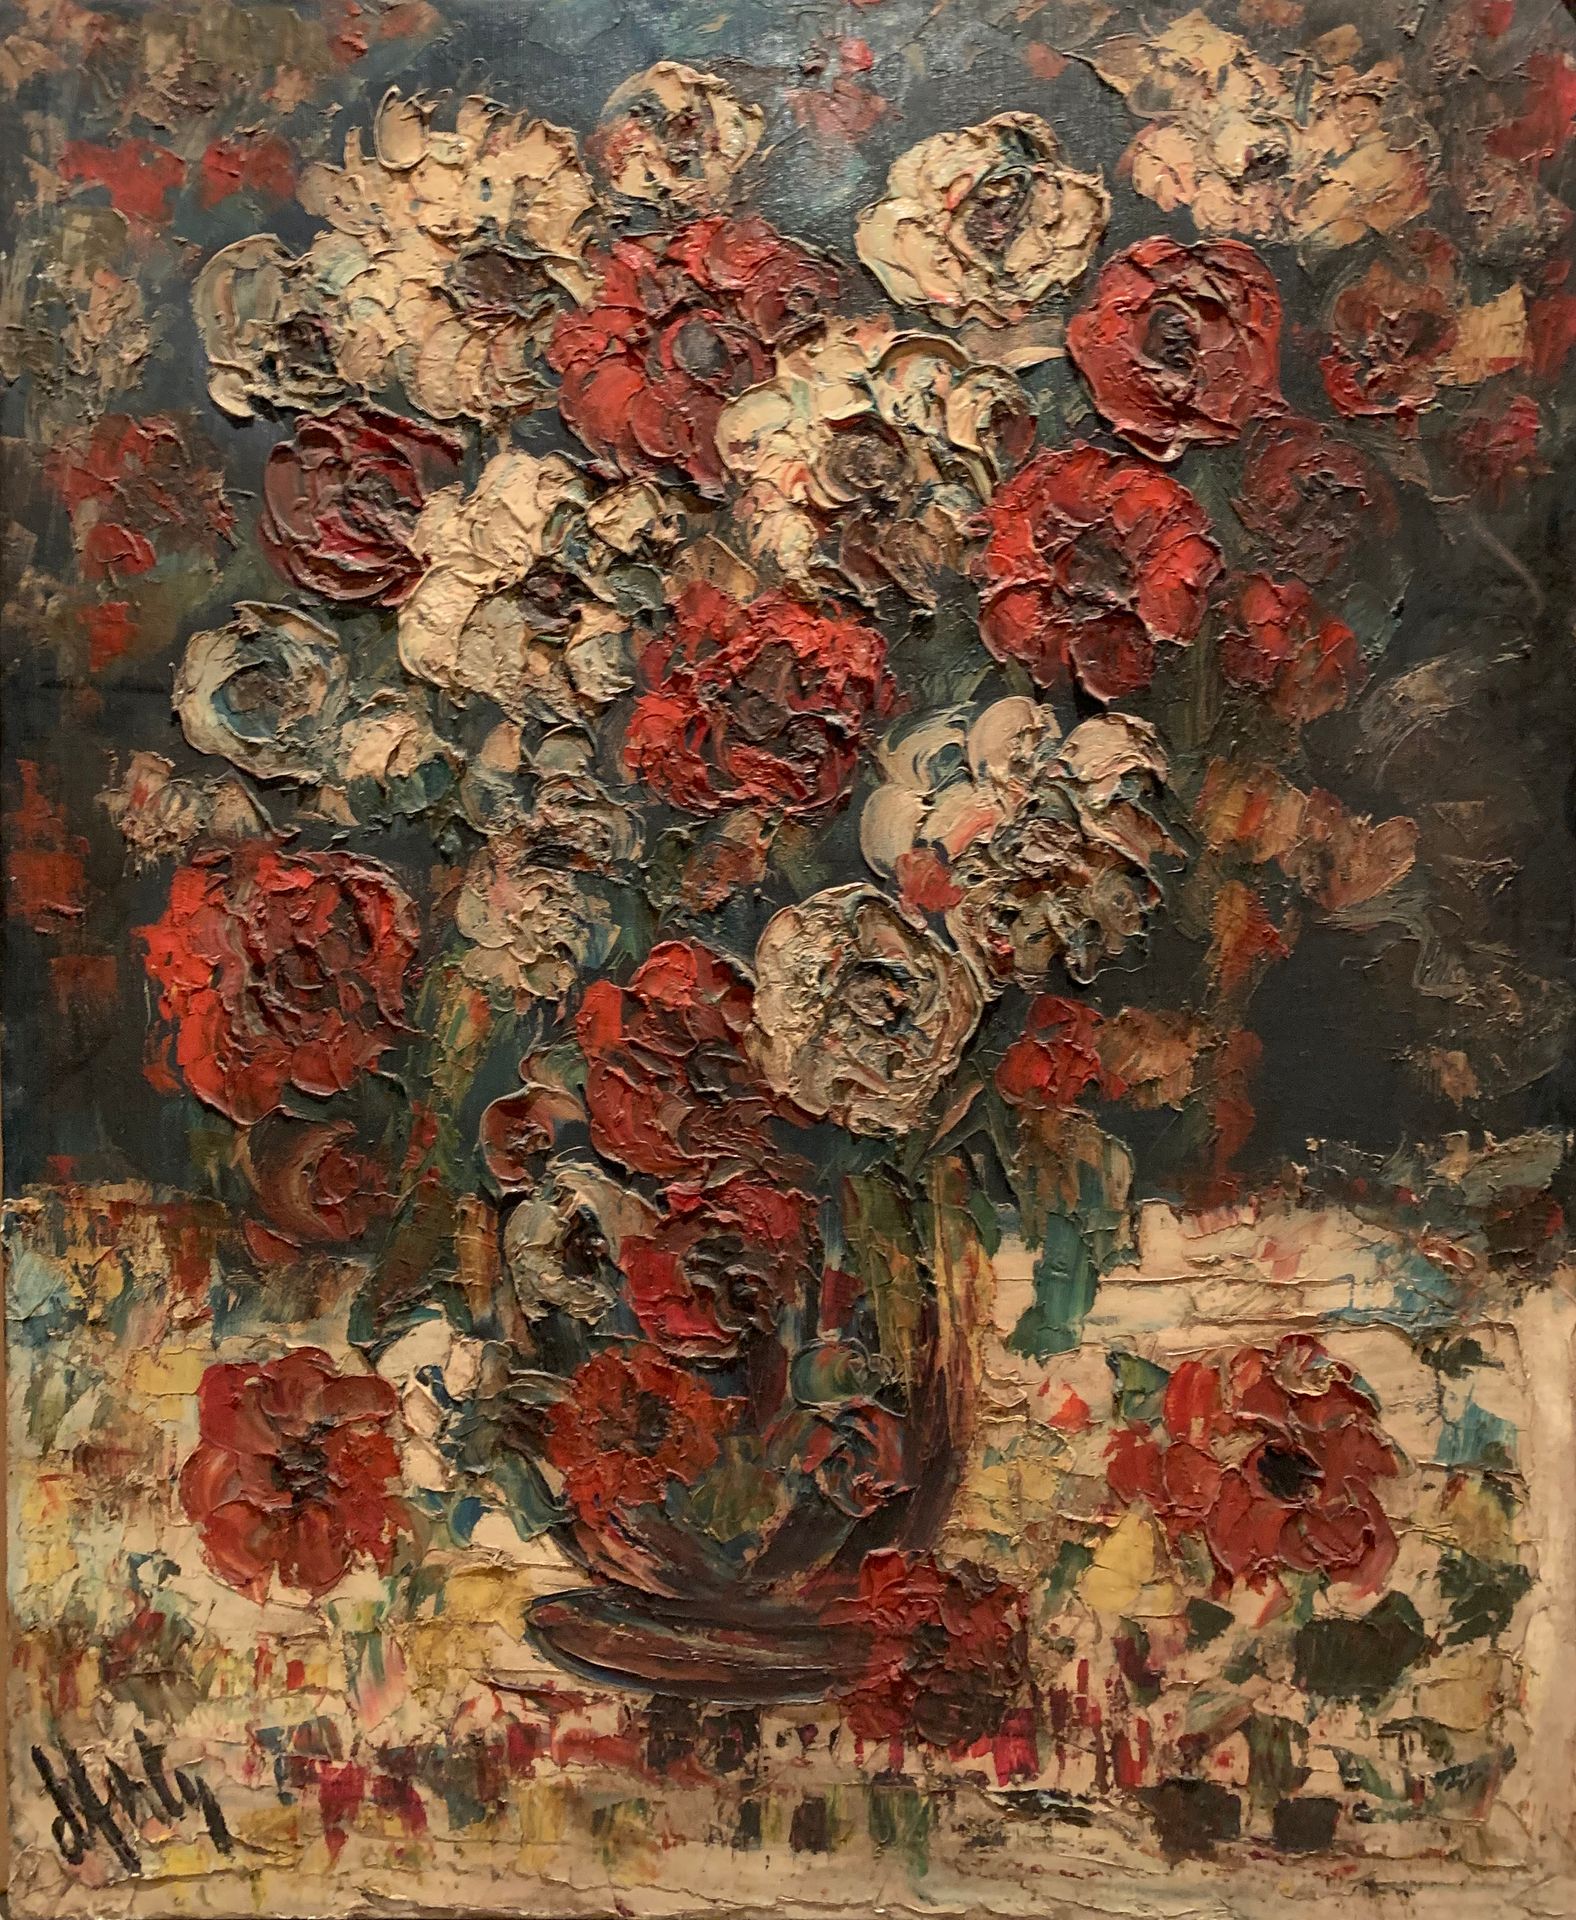 Null 亨利-莫里斯-丹提(Henry Maurice D'ANTY) (1910-1998)

一束花

布面油画，左下角有签名

100 x 81厘米。